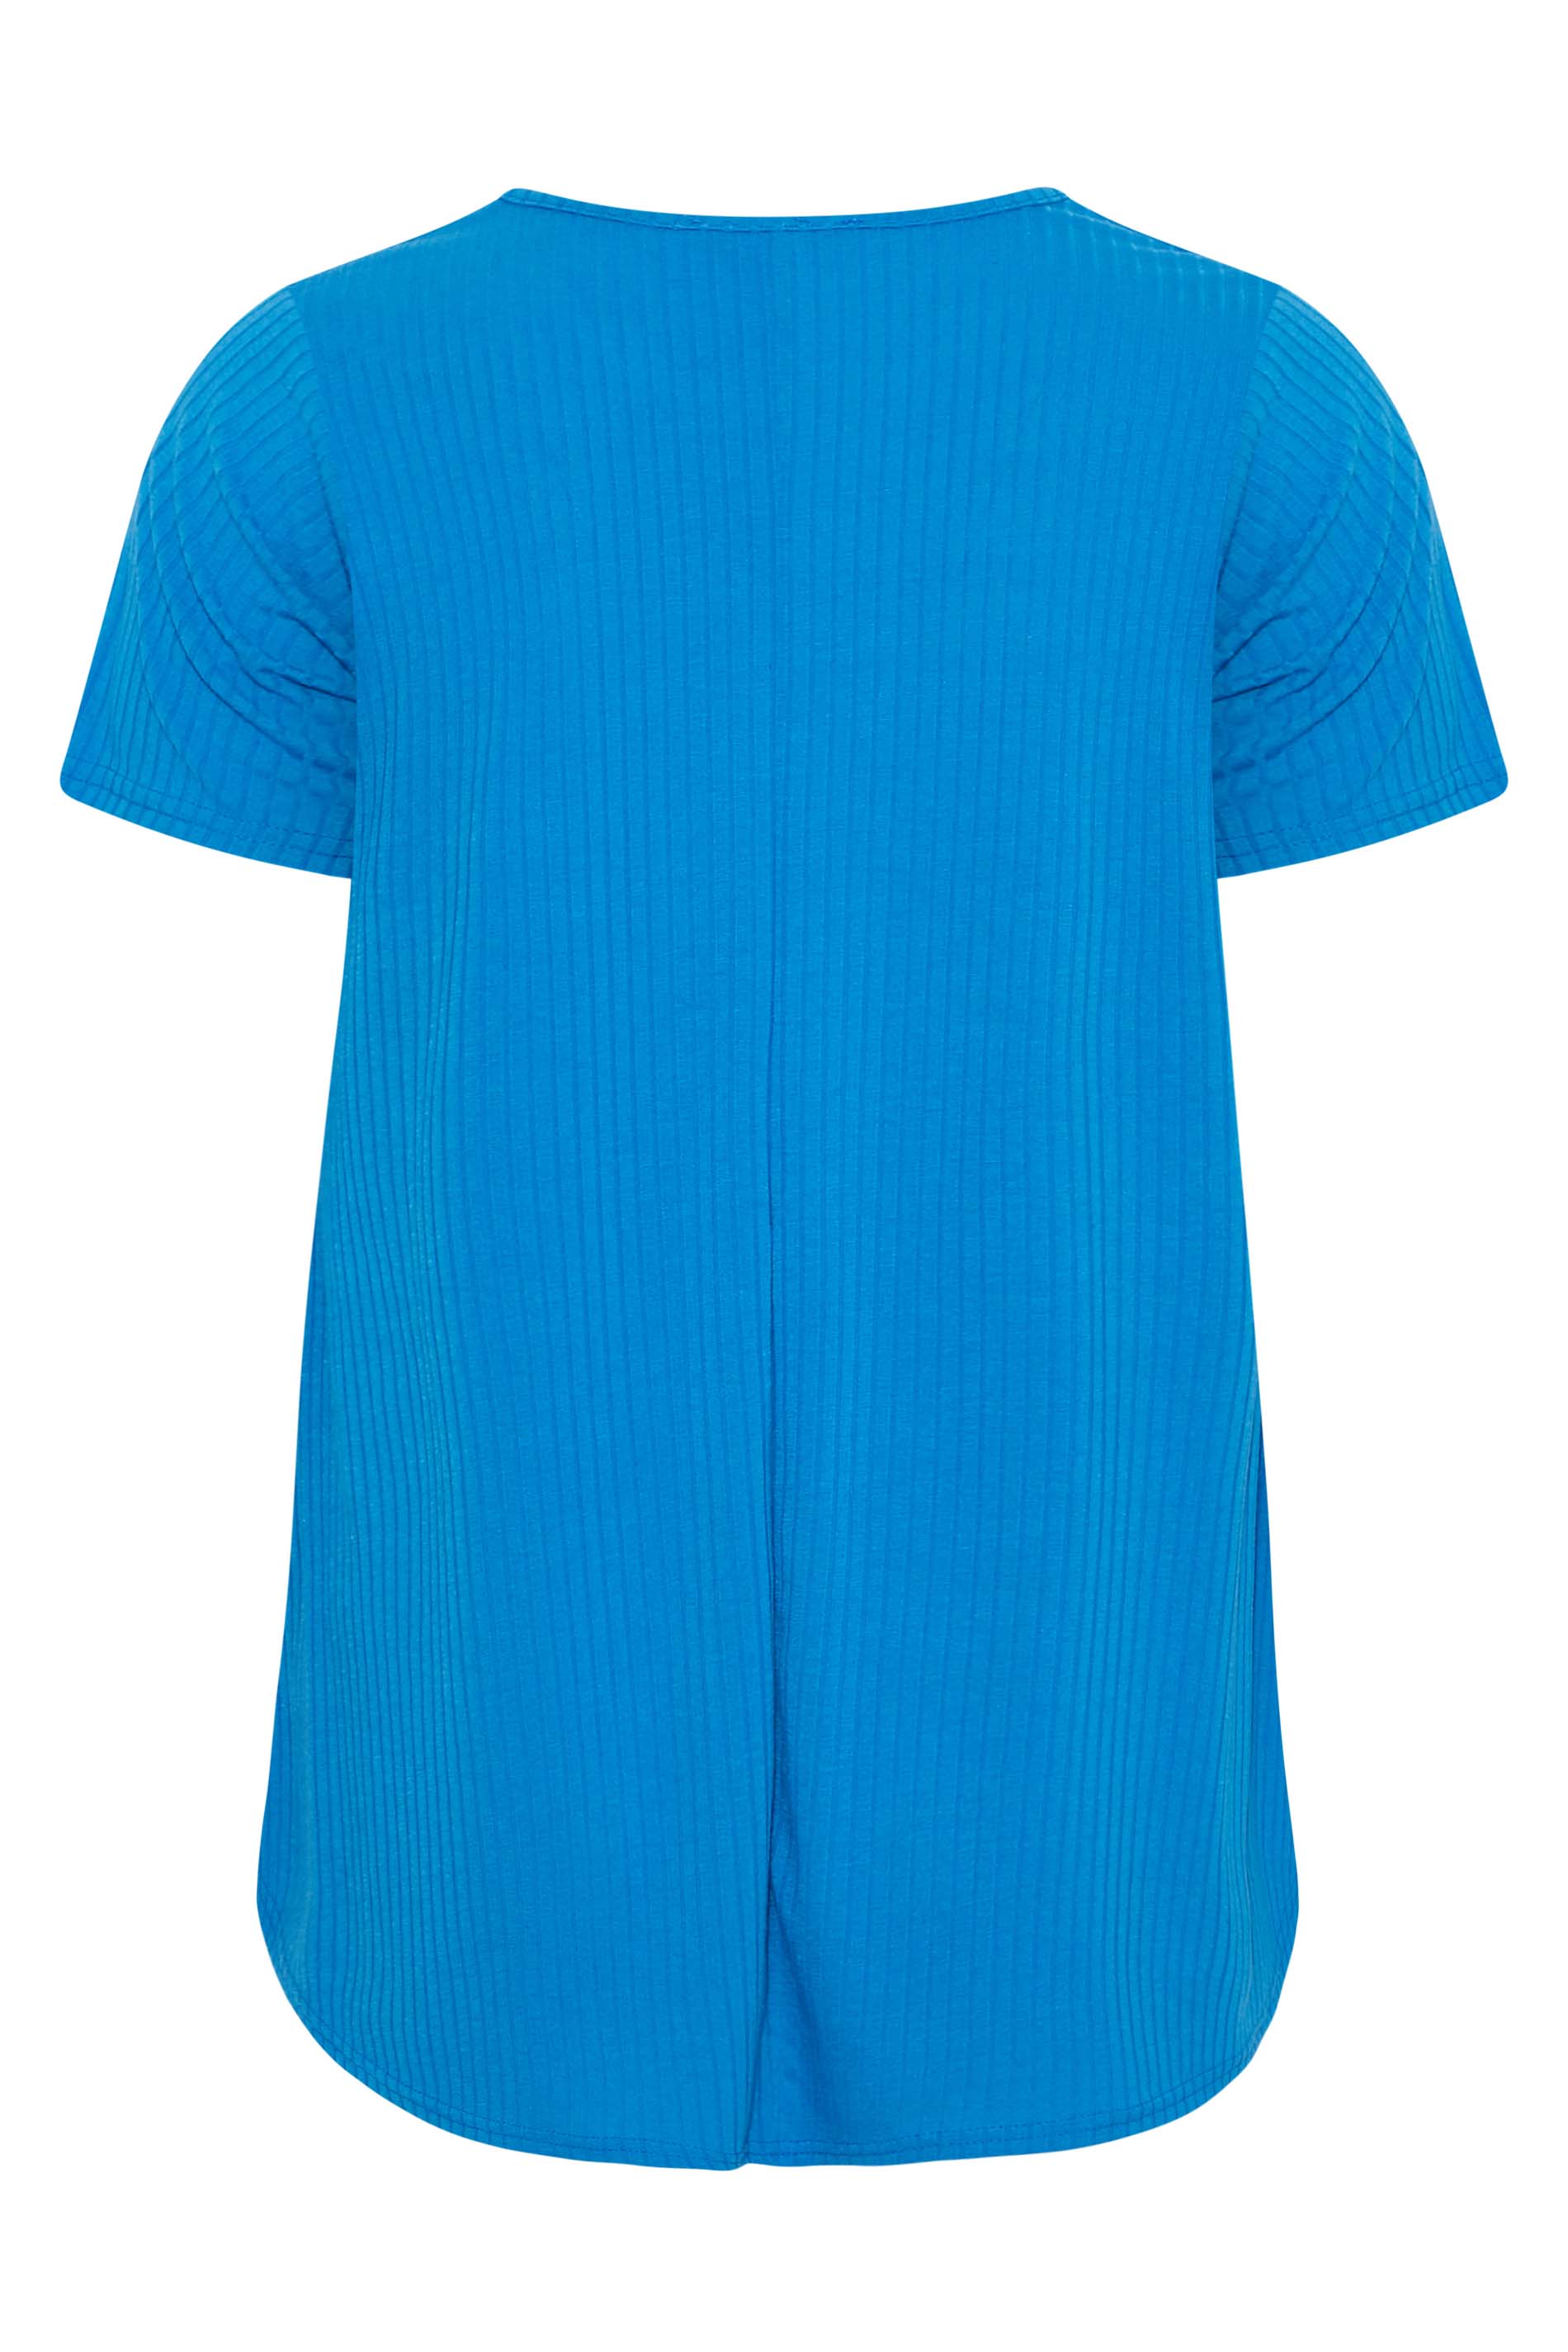 Grande taille  Tops Grande taille  T-Shirts | LIMITED COLLECTION - Top Bleu Roi Nervuré Style Volanté - MH55224